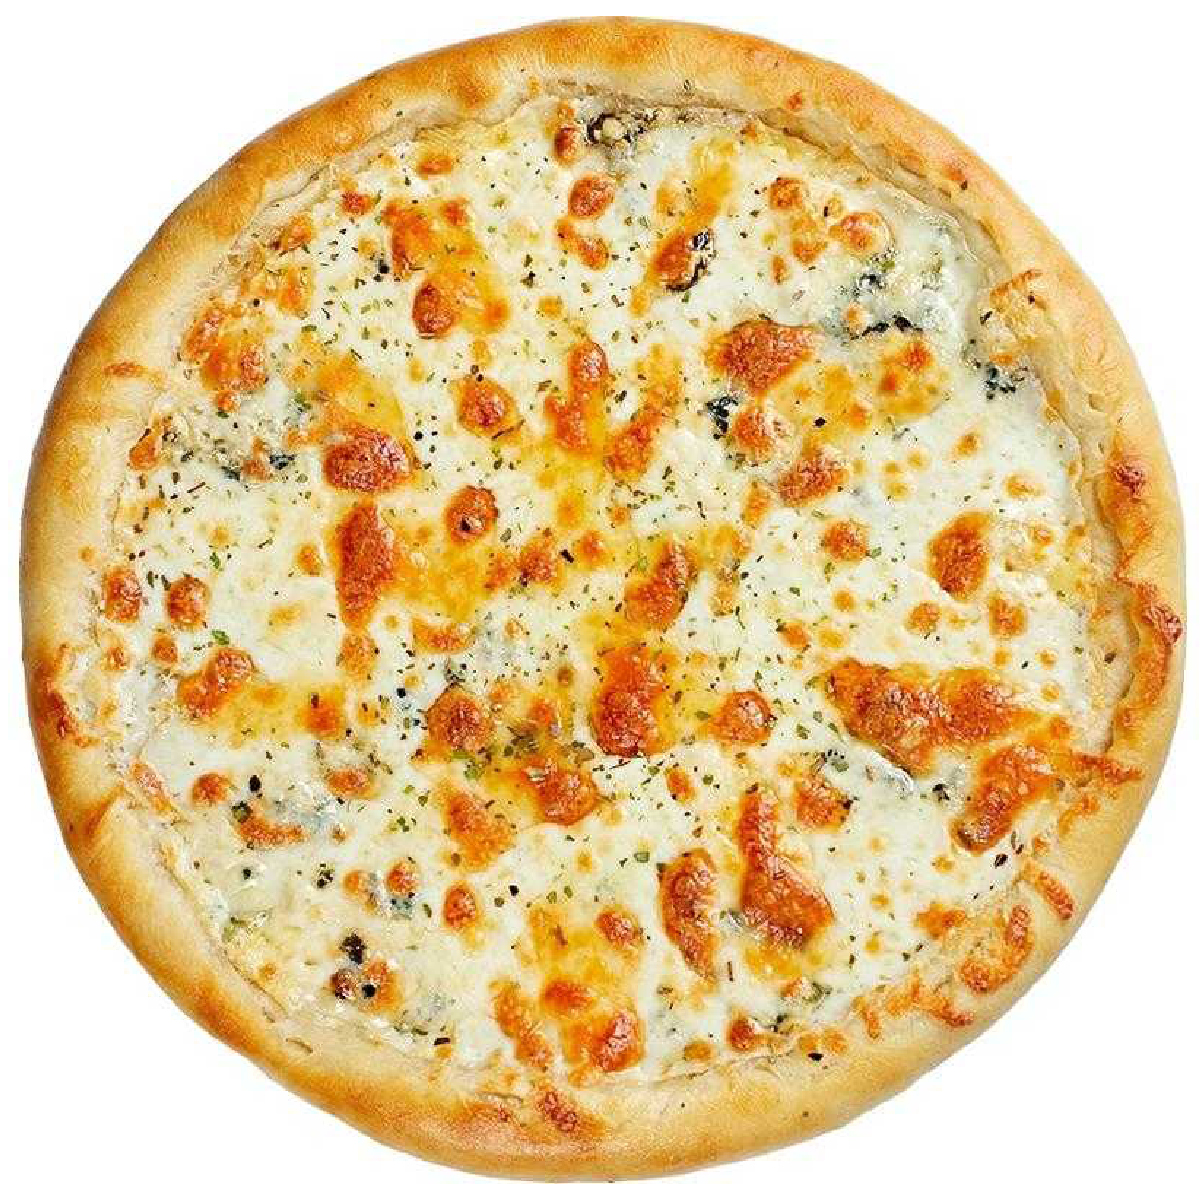 Quattro formaggi пицца четыре сыра Цезарь